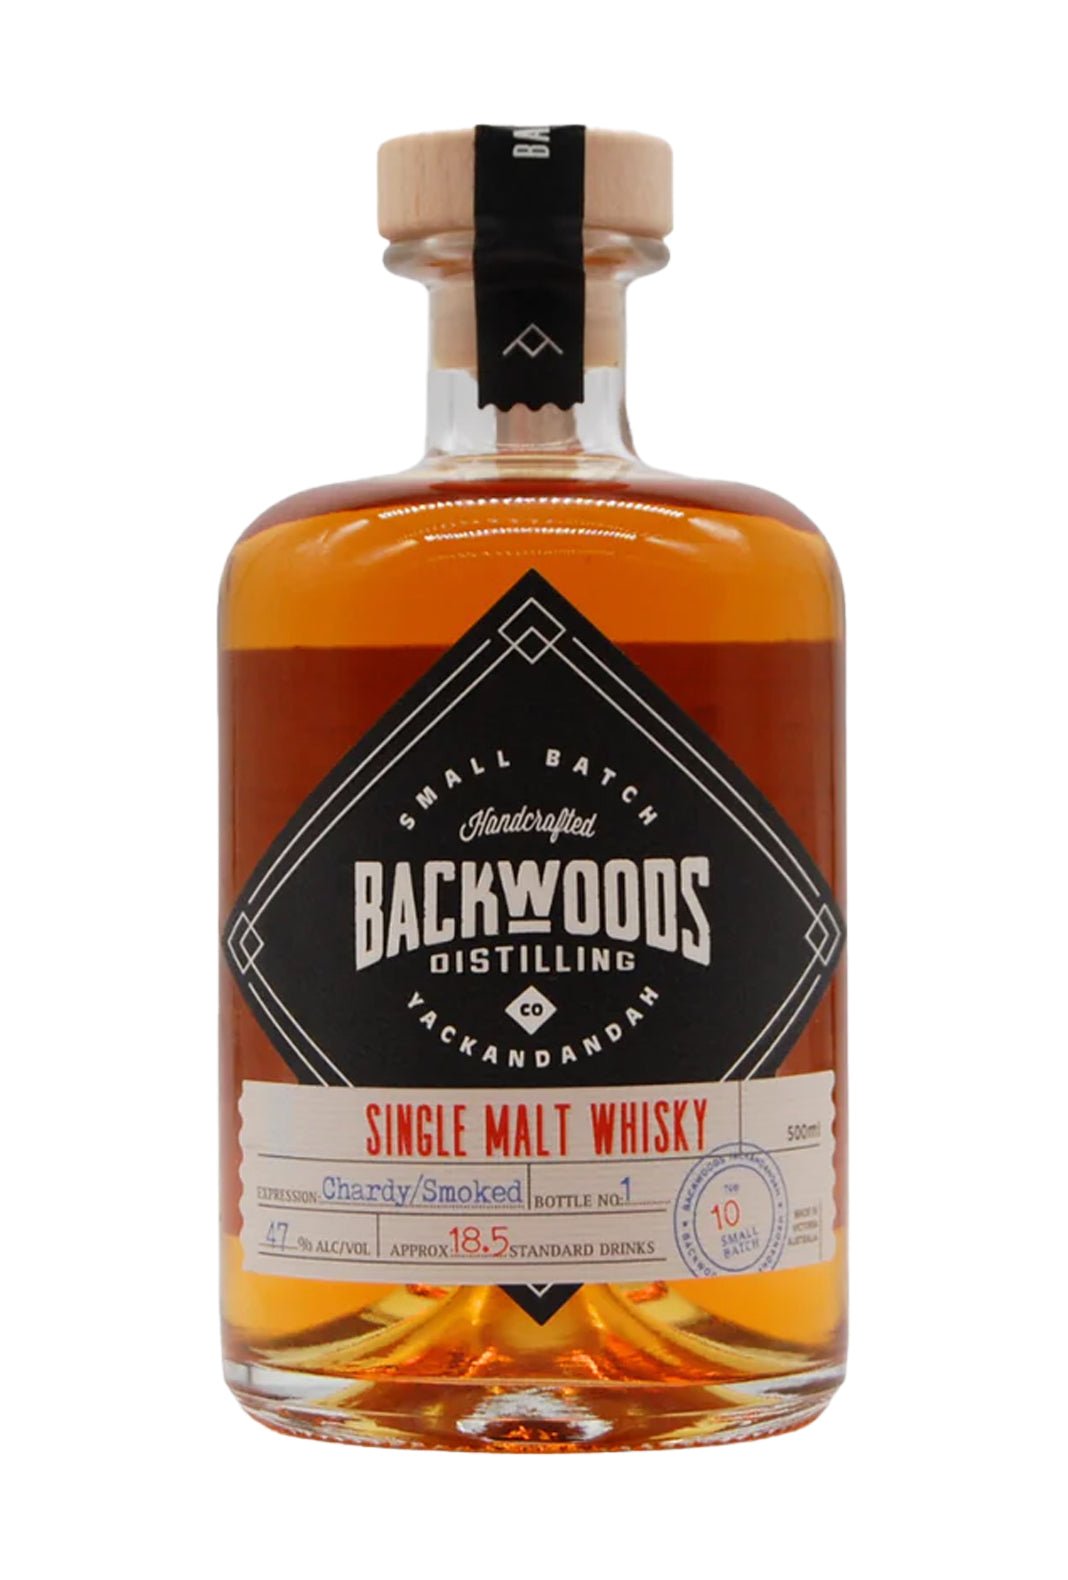 Backwoods Single Malt Batch 10 Chardonnay/smoked 47% 500ml | Whisky | Shop online at Spirits of France